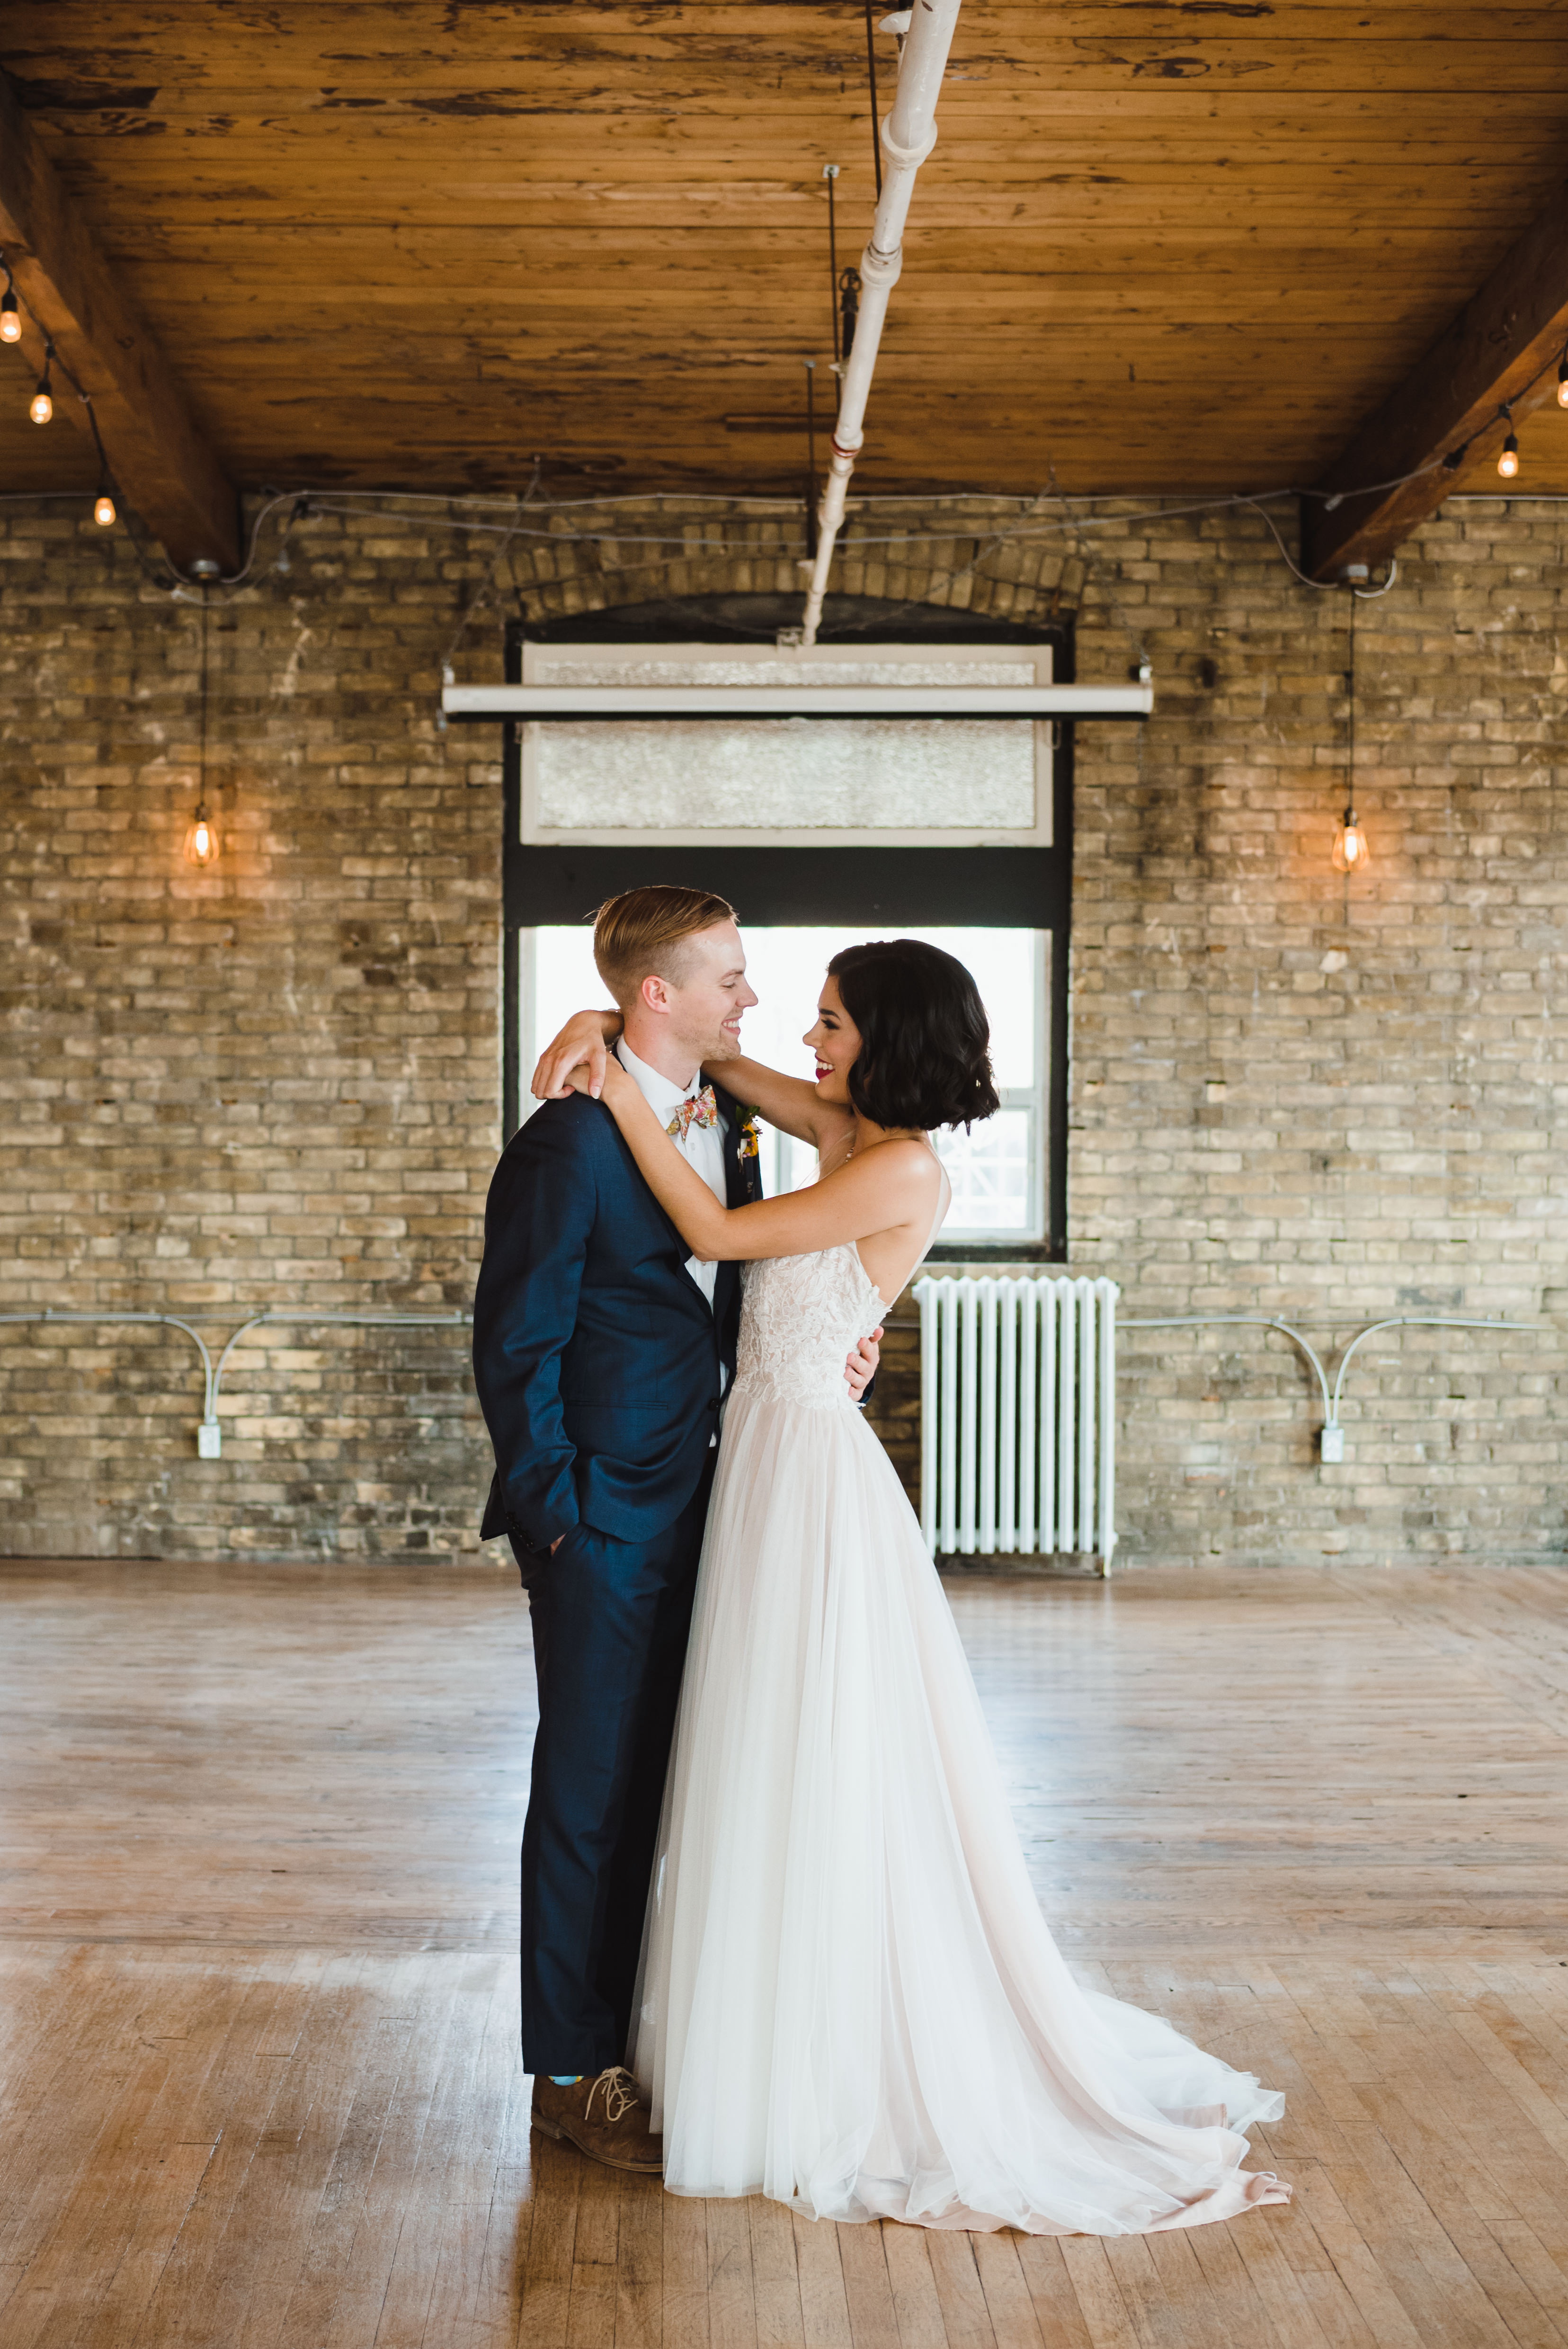 bride and groom slow dancing inside old brick building Toronto wedding photography